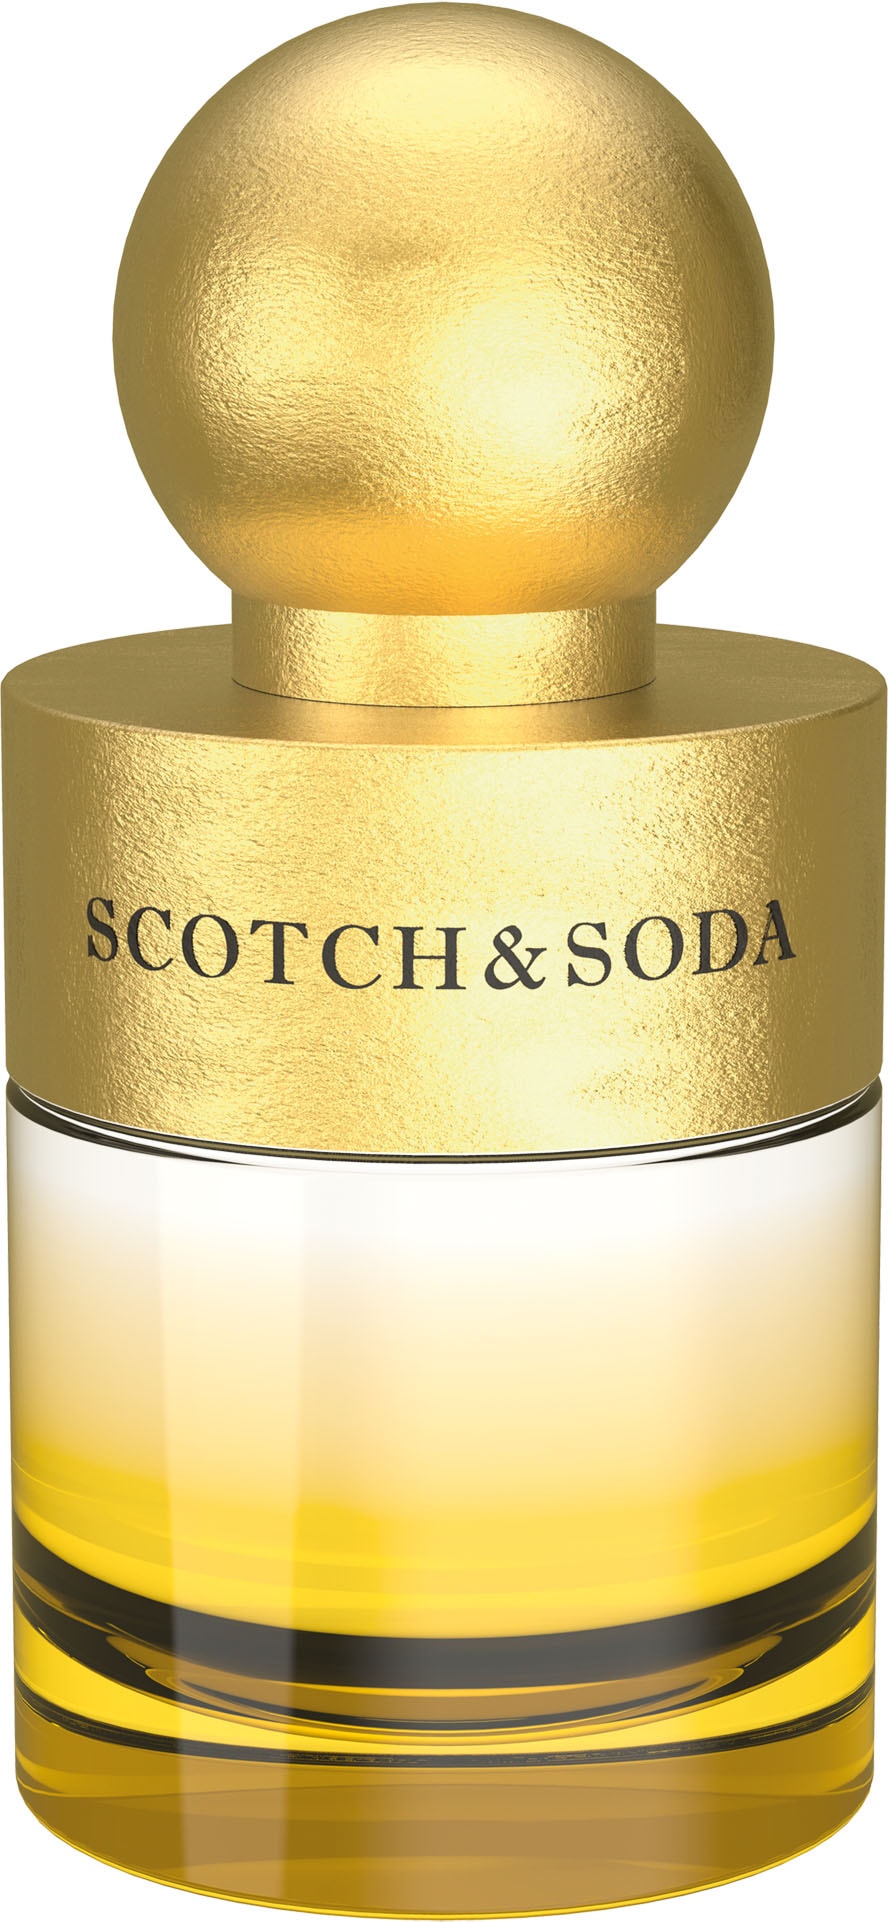 BAUR de | Soda & Scotch bestellen Parfum »Island online Women« Water Eau